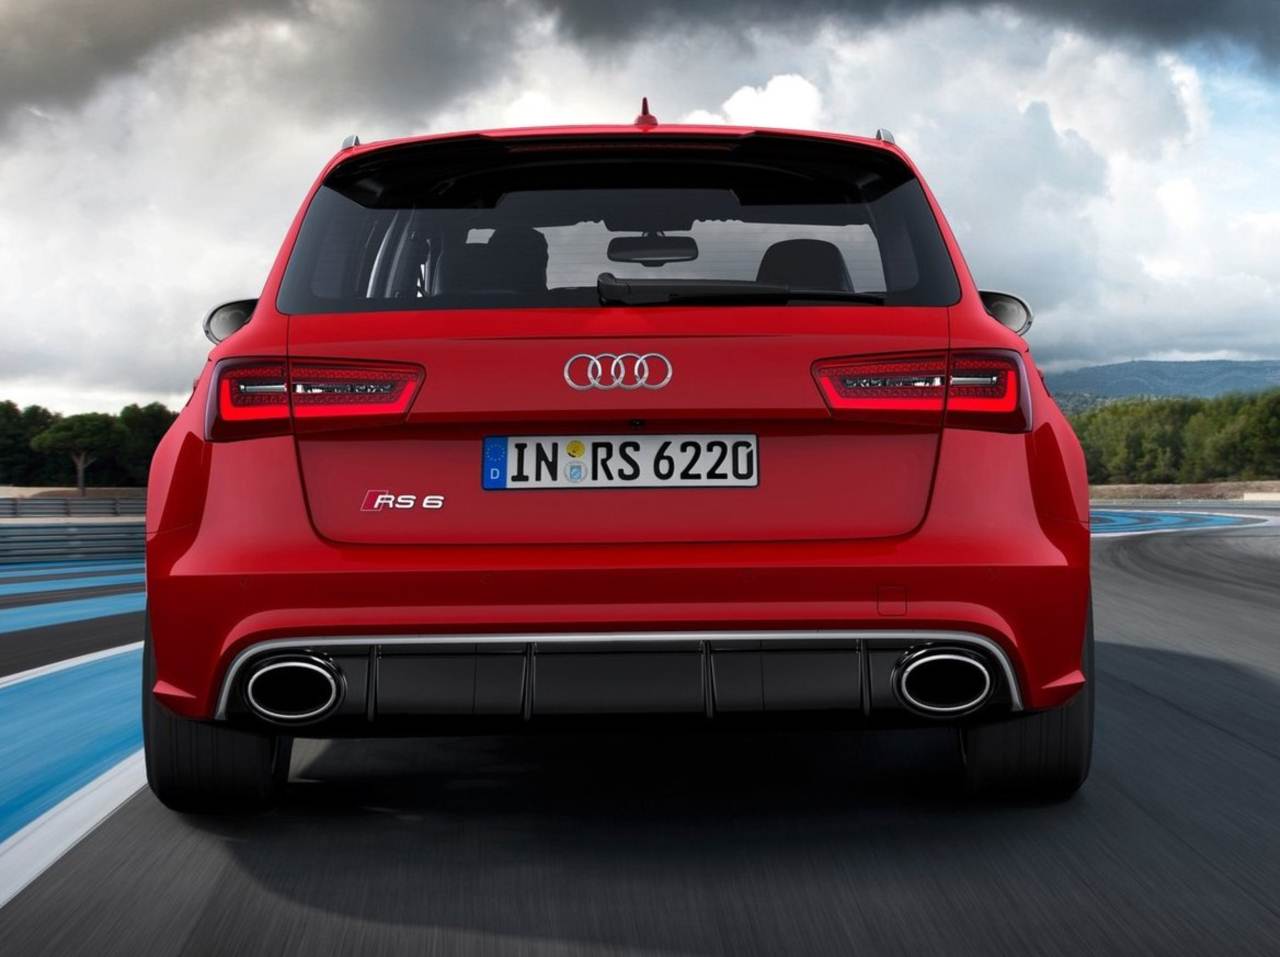 Audi RS6 tabela fipe